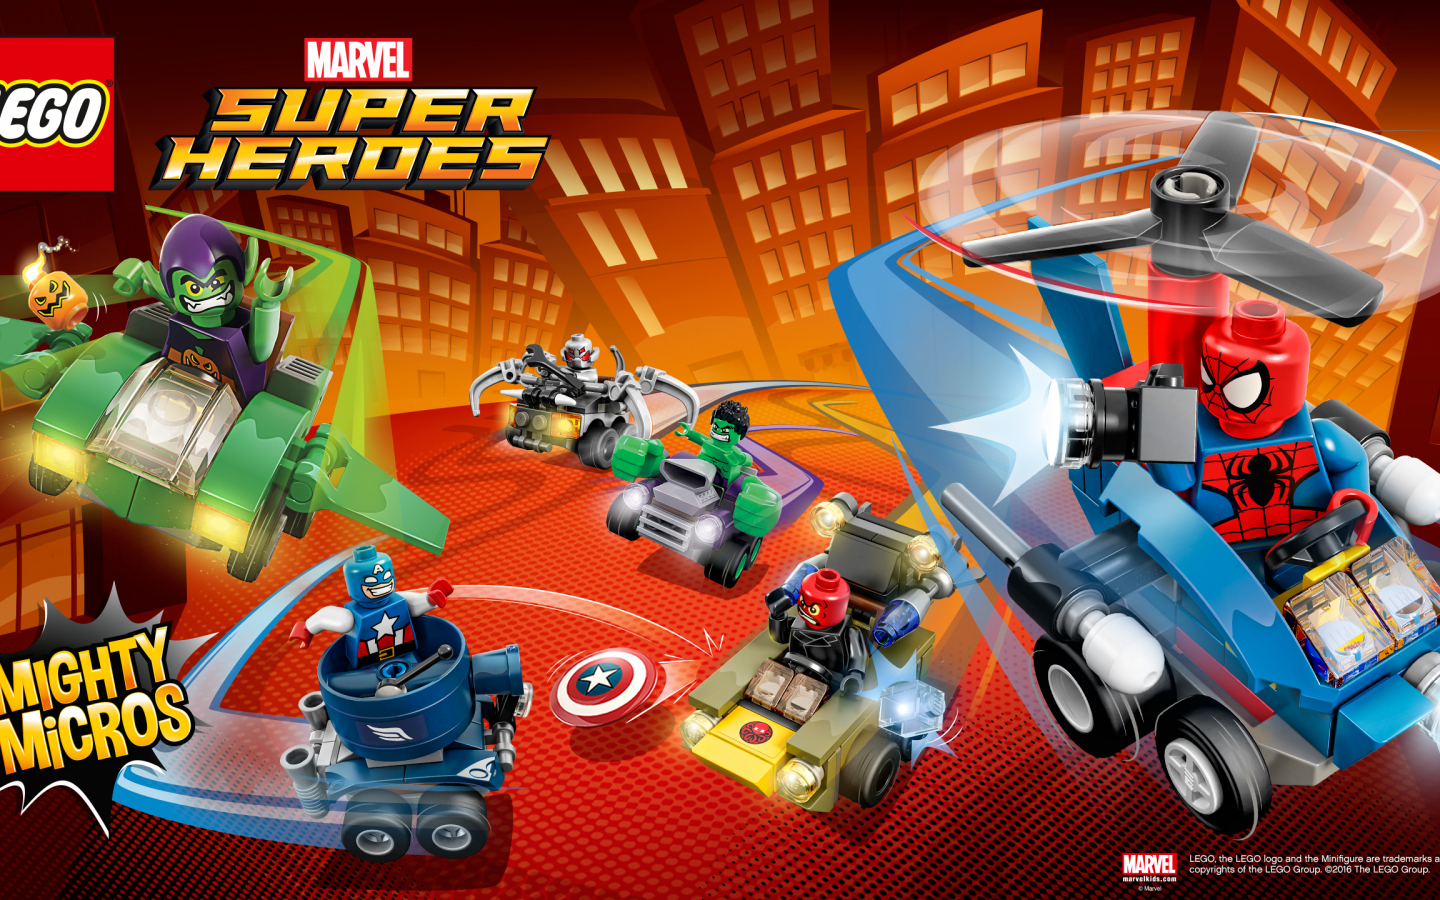 Marvel Mighty Micros Wallpaper Lego Super